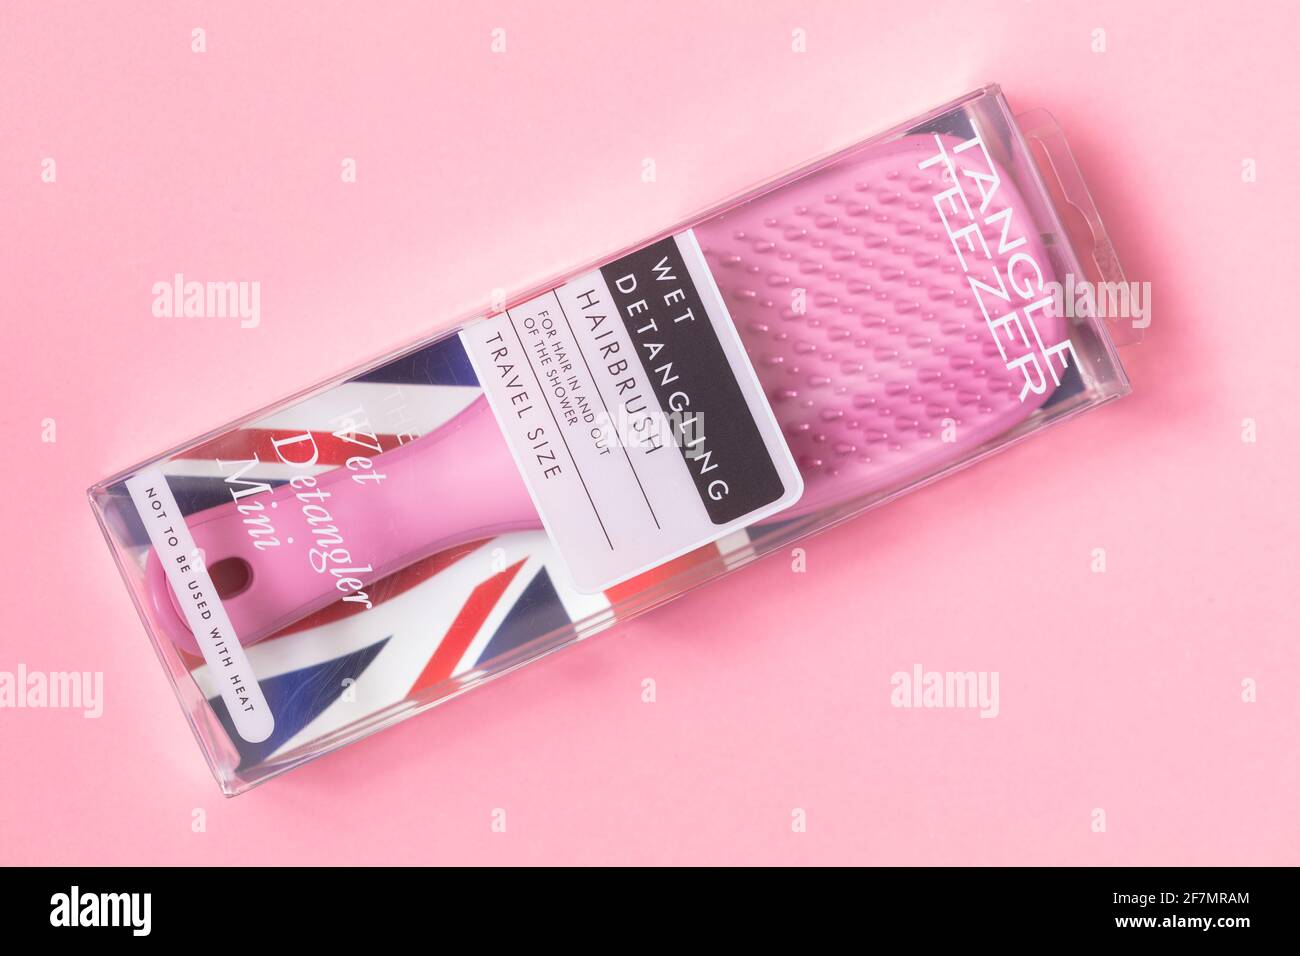 London, United Kingdom - April 8, 2021: Pink Tangle Teezer Mini on pink background Stock Photo